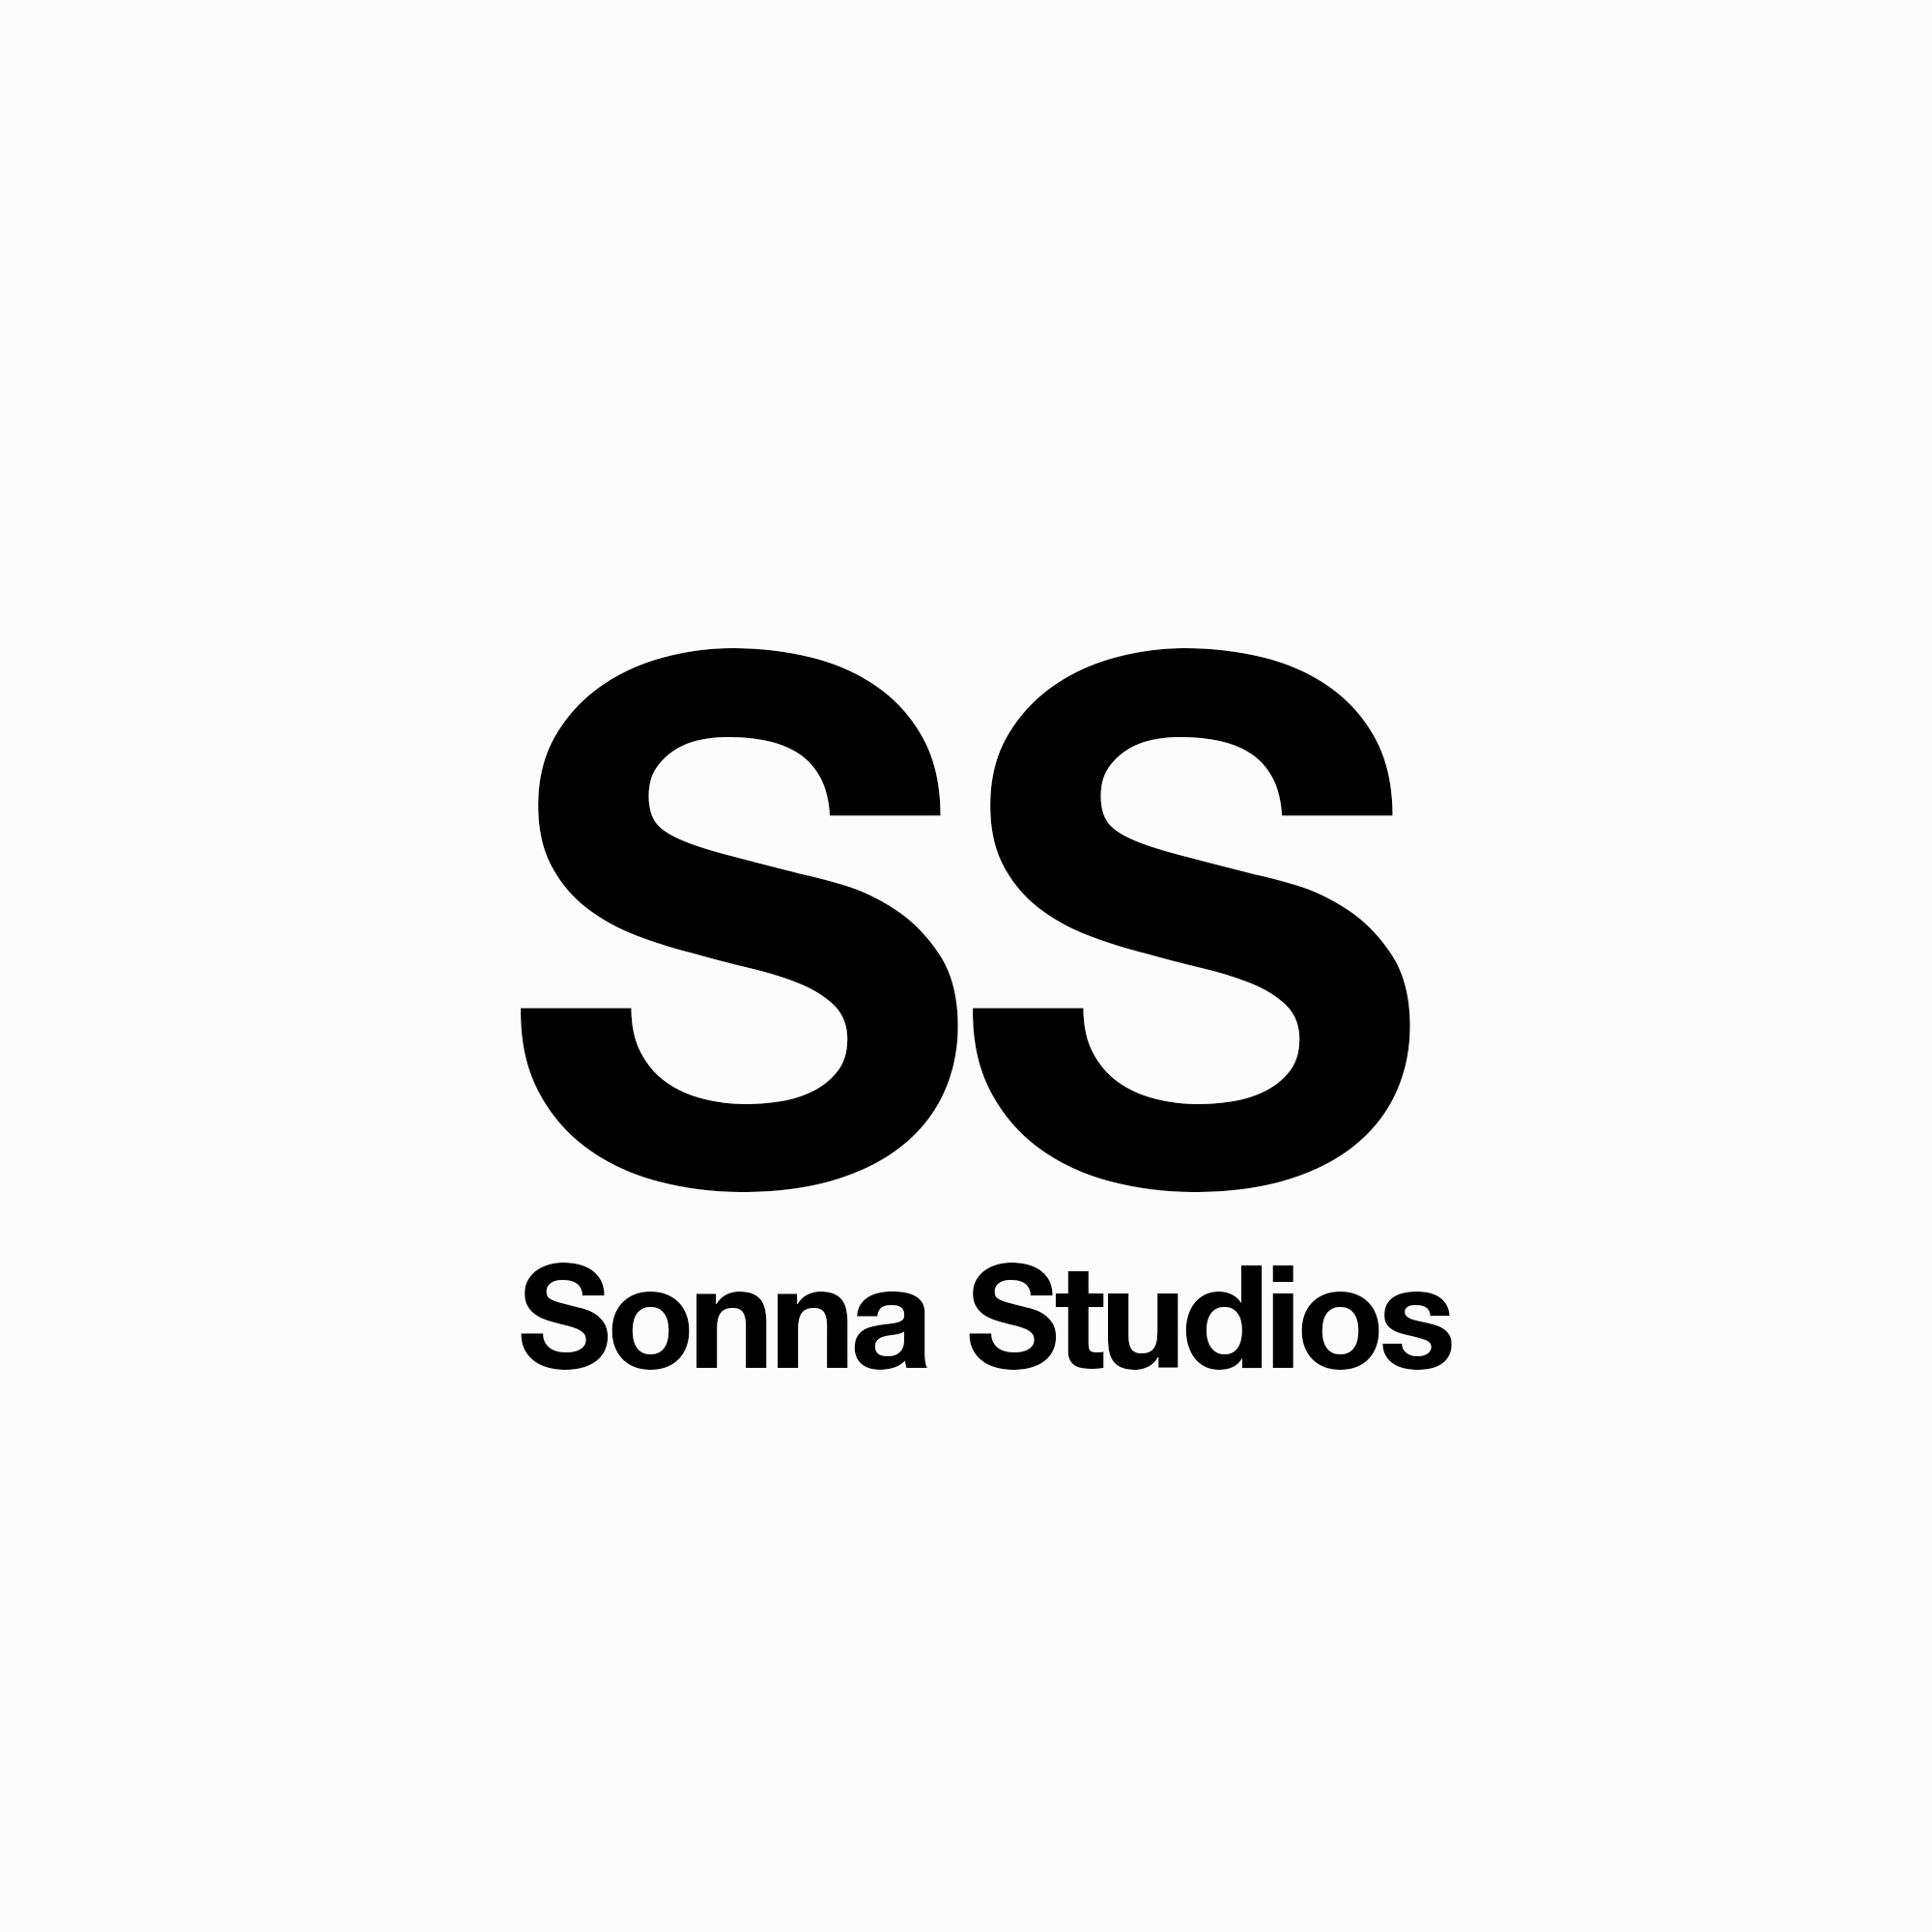 
Sonna Studios